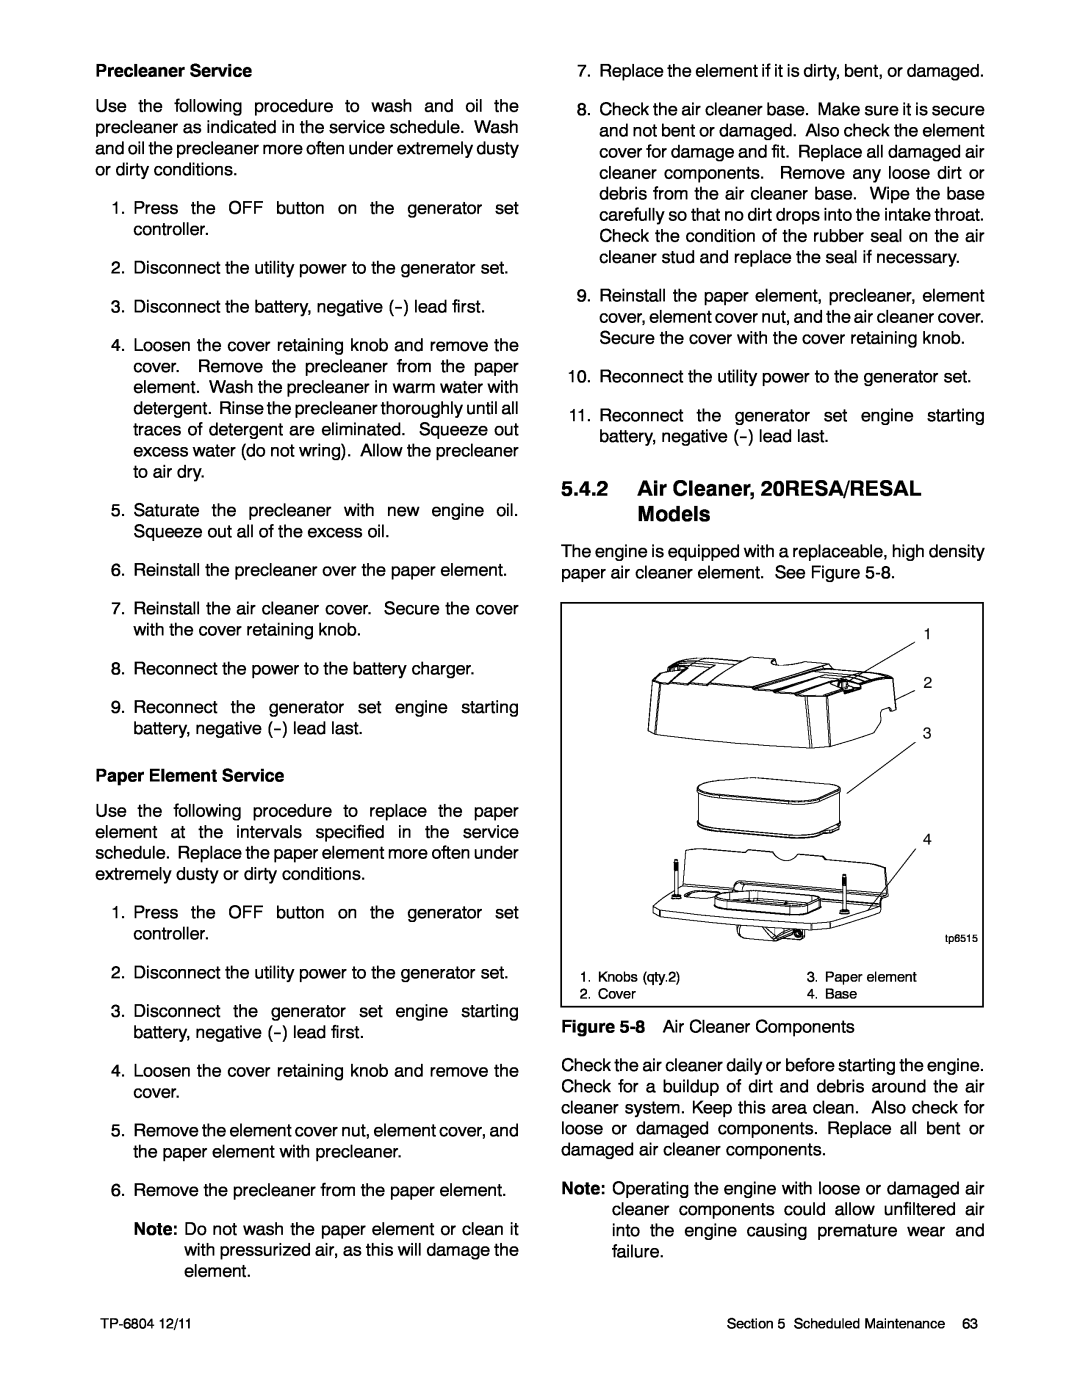 Kohler 14/20RESAL manual Air Cleaner, 20RESA/RESAL Models, tp6515 